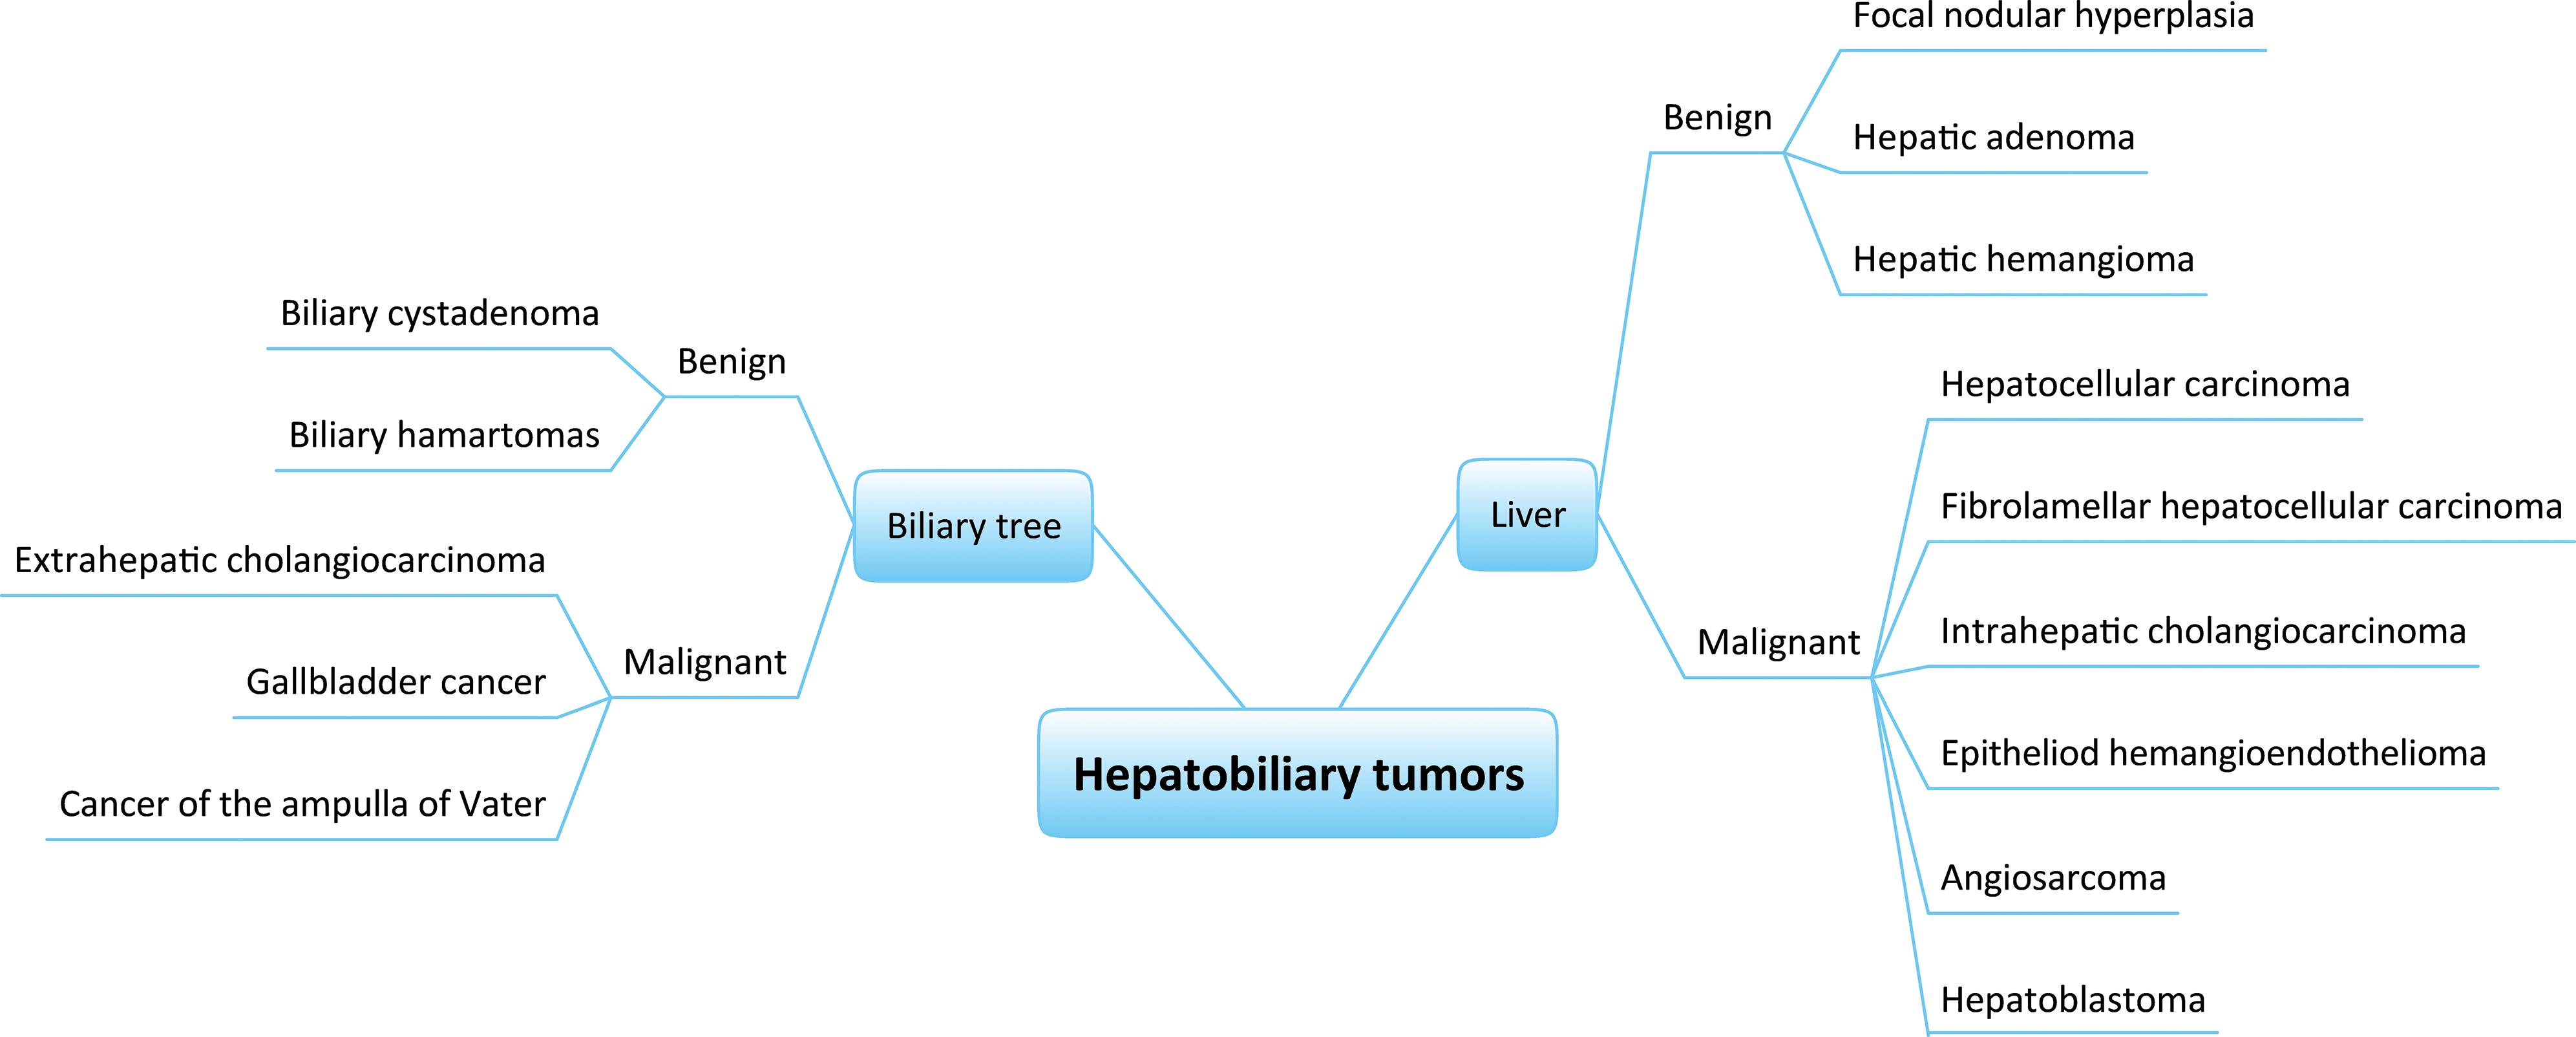 List of malignant and benign hepatobiliary tumors.